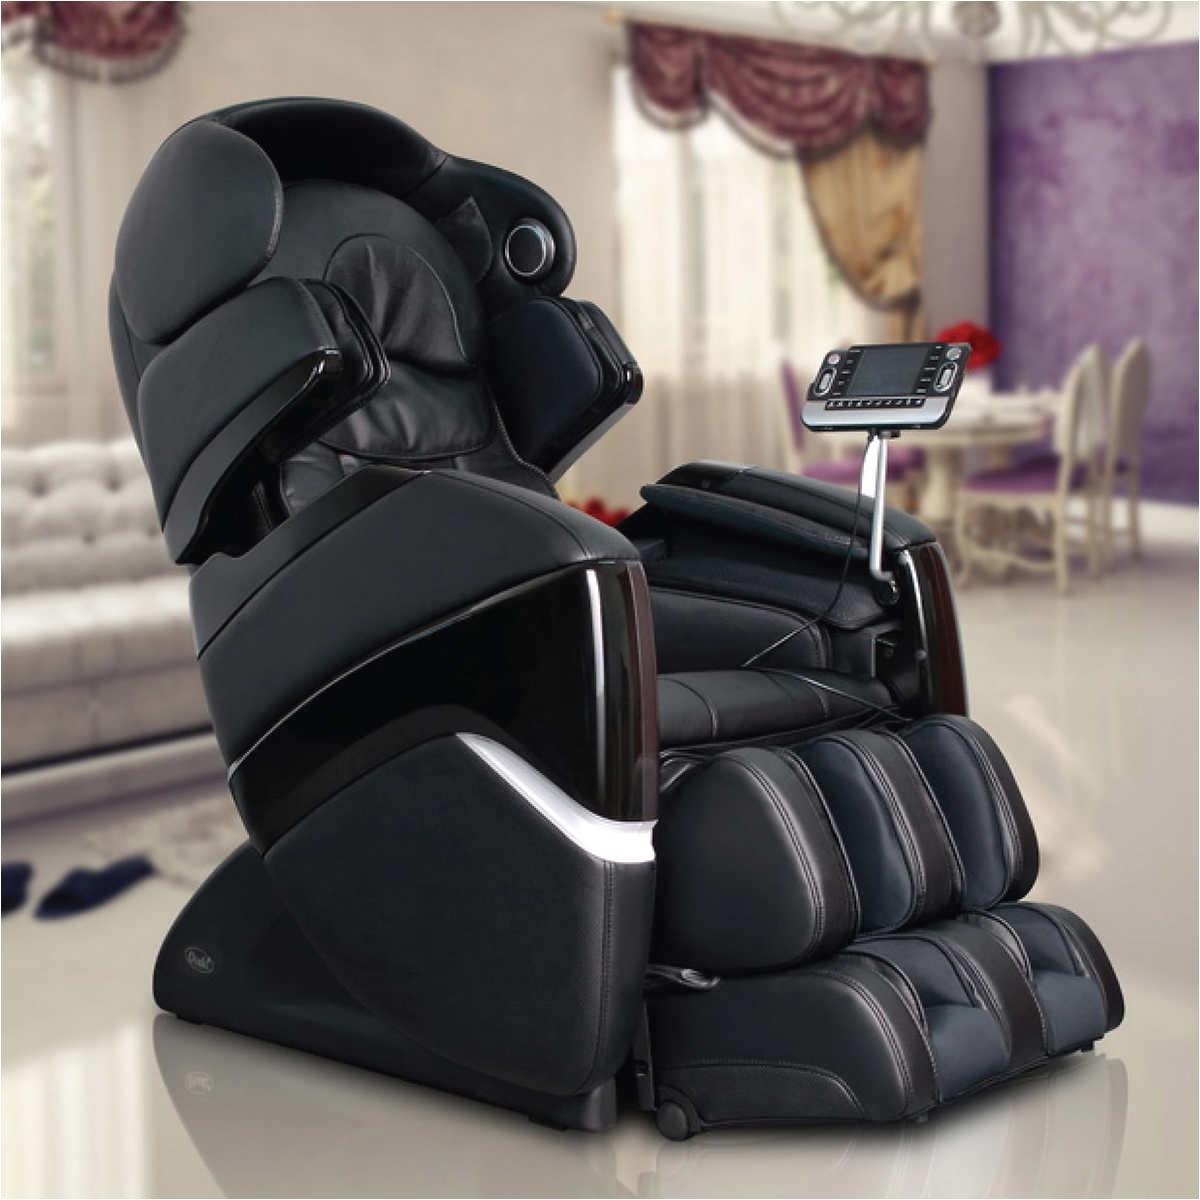 Infinity Iyashi Massage Chair Costco Costco Massage Chair Chair Ideas